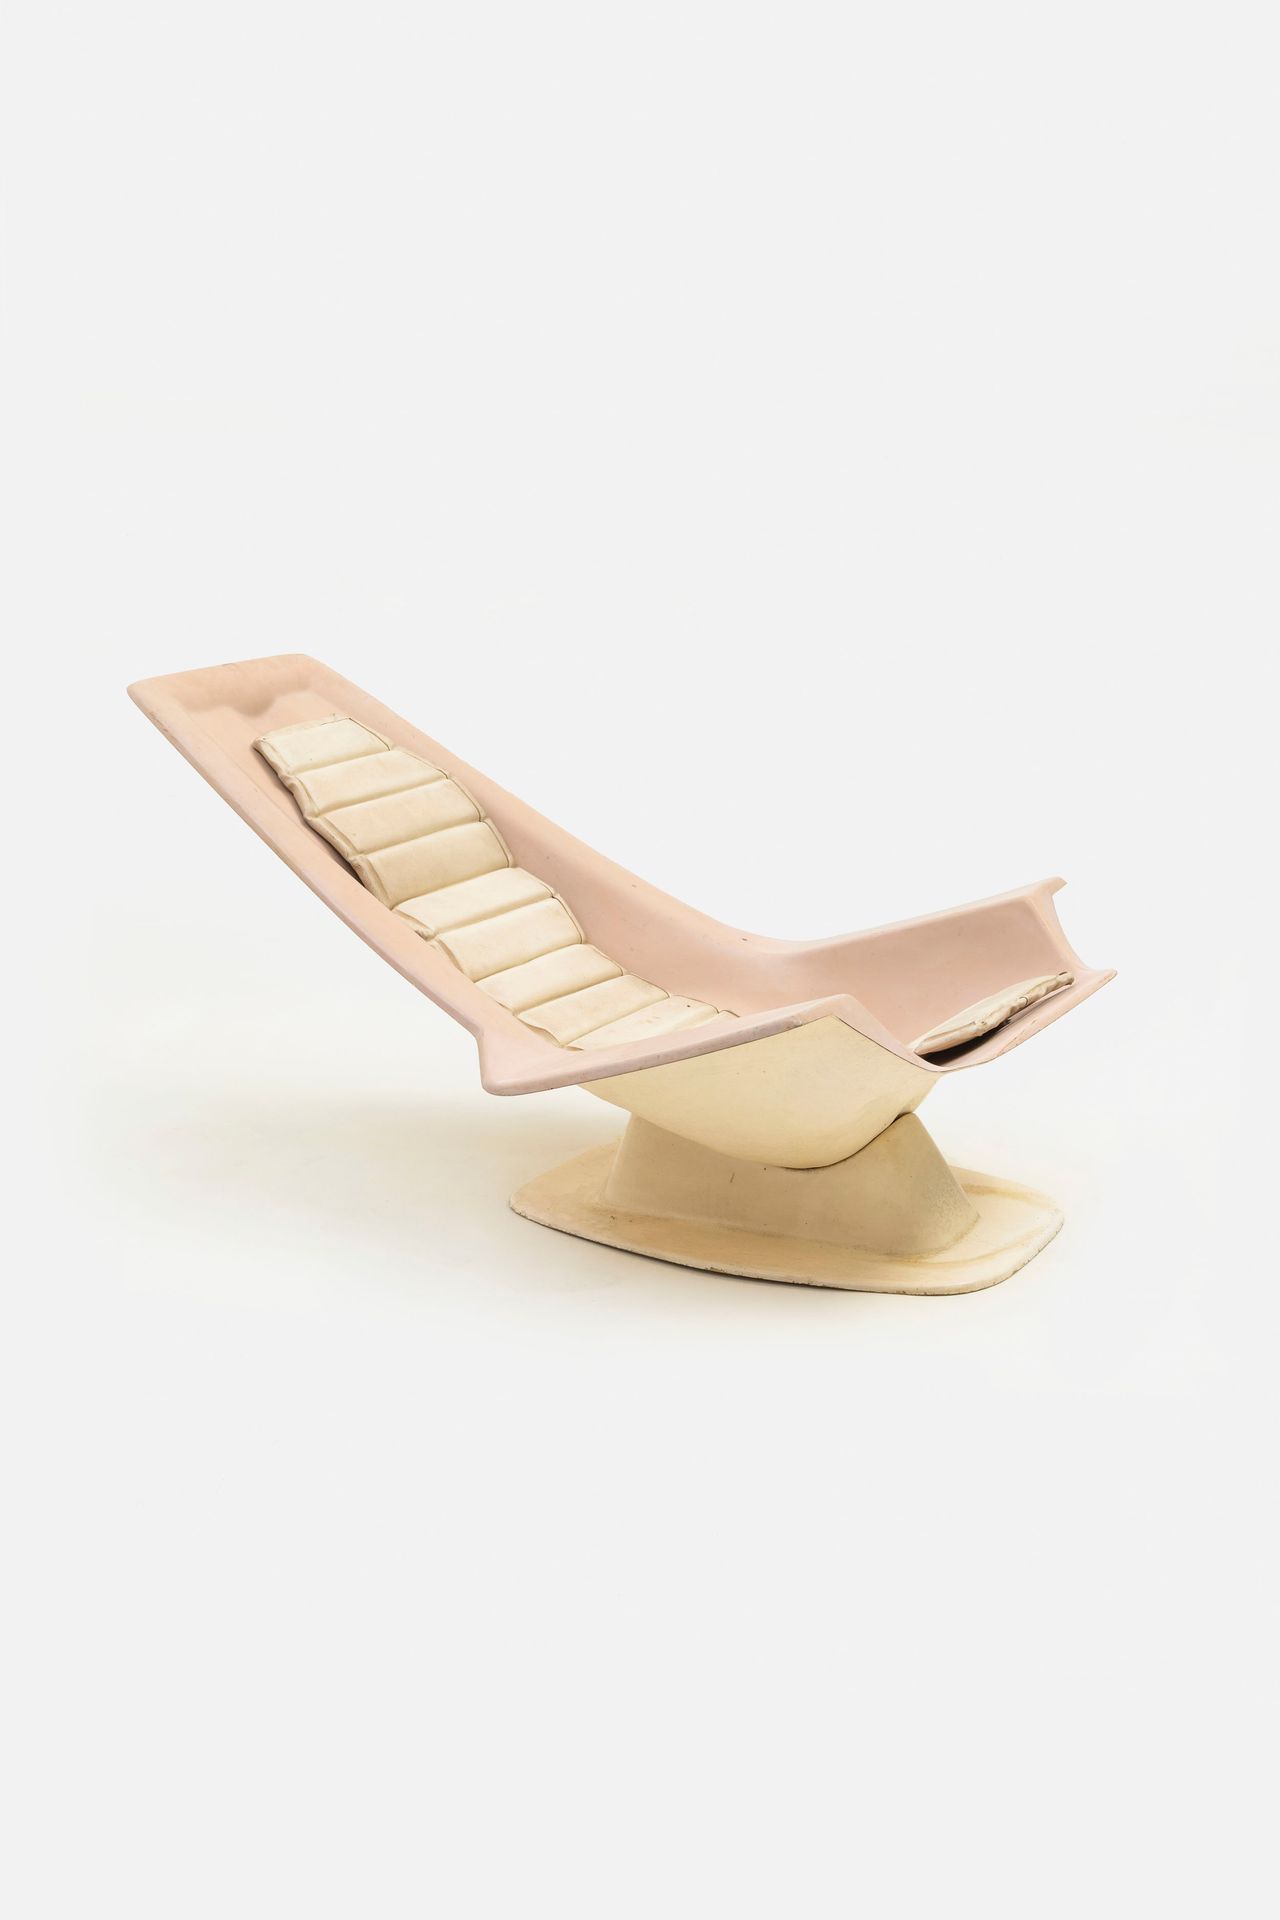 MANIFATTURA FRANCESE 扶手椅。玻璃纤维，软垫家具。1960s. 
61x75x110厘米
法国扶手椅



状况良好，有条纹和磨损的痕迹，有&hellip;